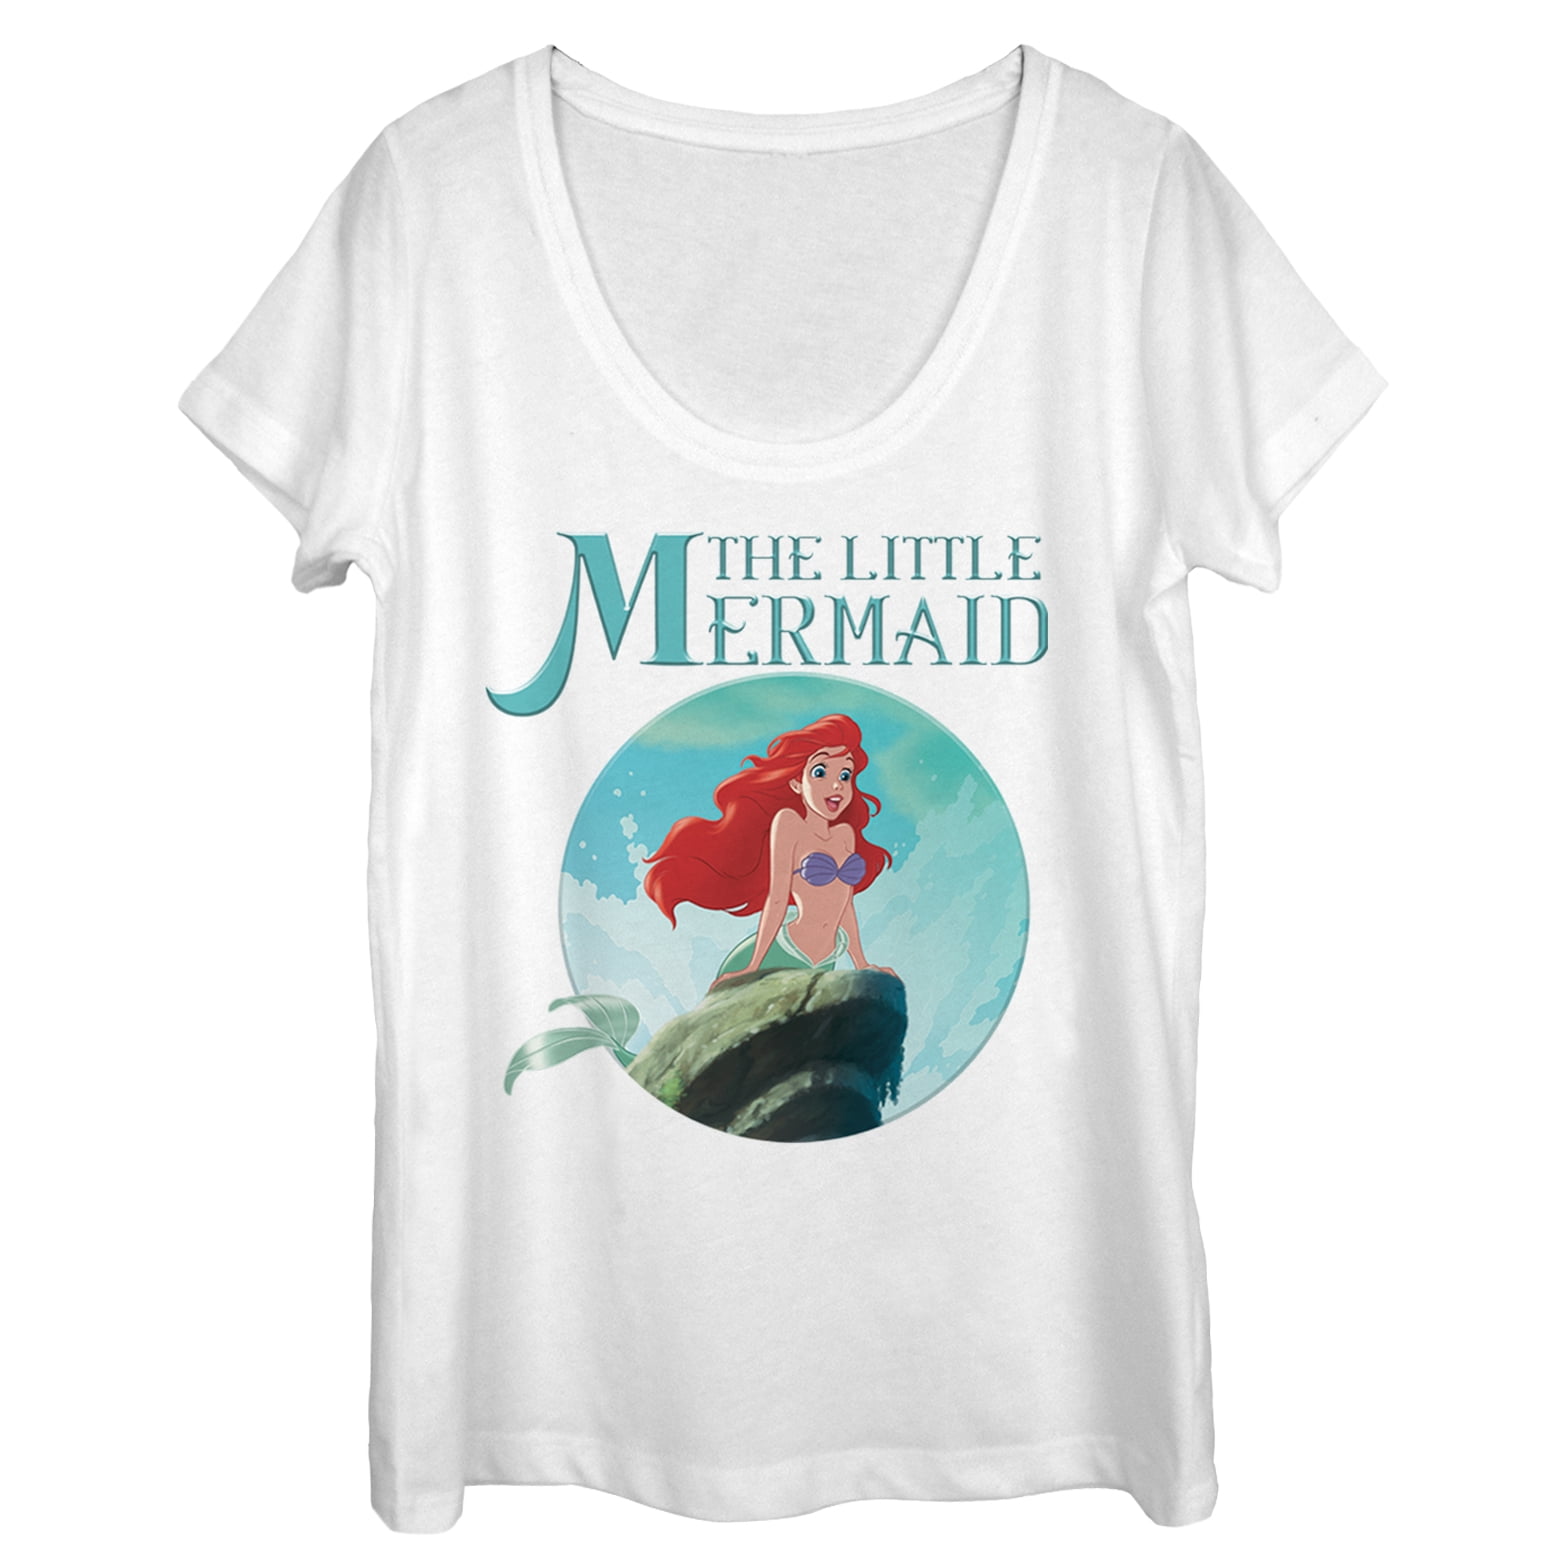 New Disney Store Women Ariel Tee shirt T Top The Little Mermaid 